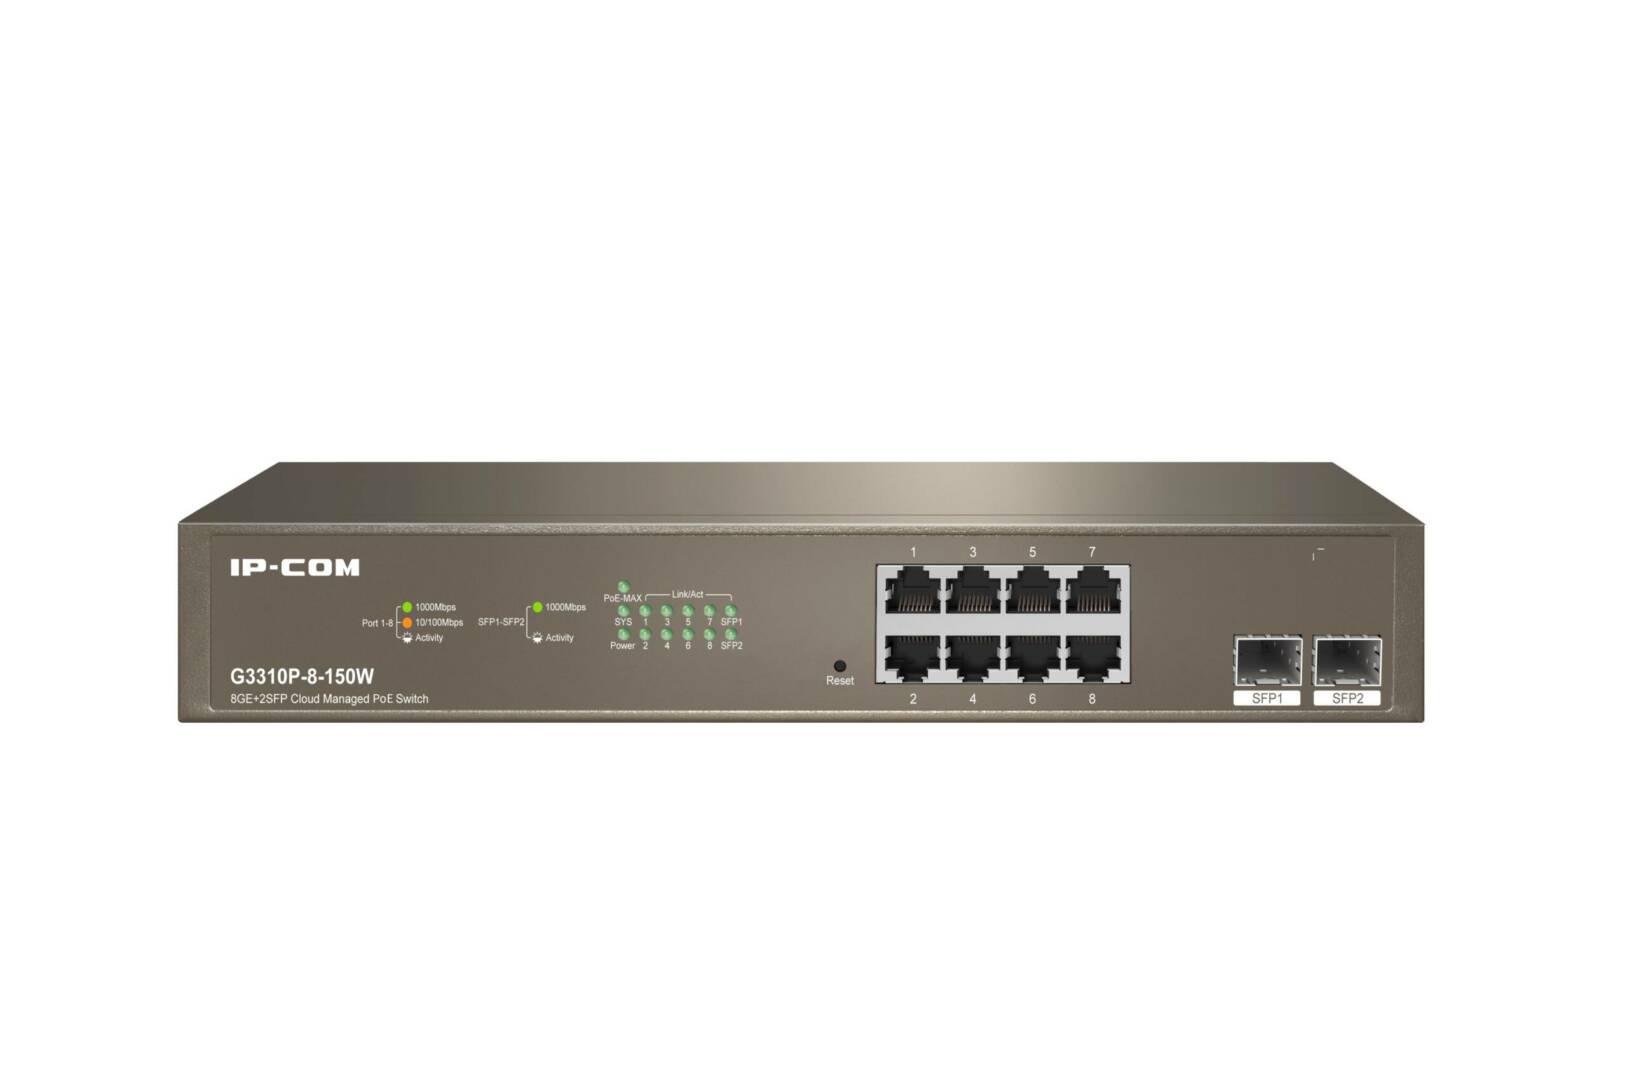 Switch IP-Com G3310P-8-150W